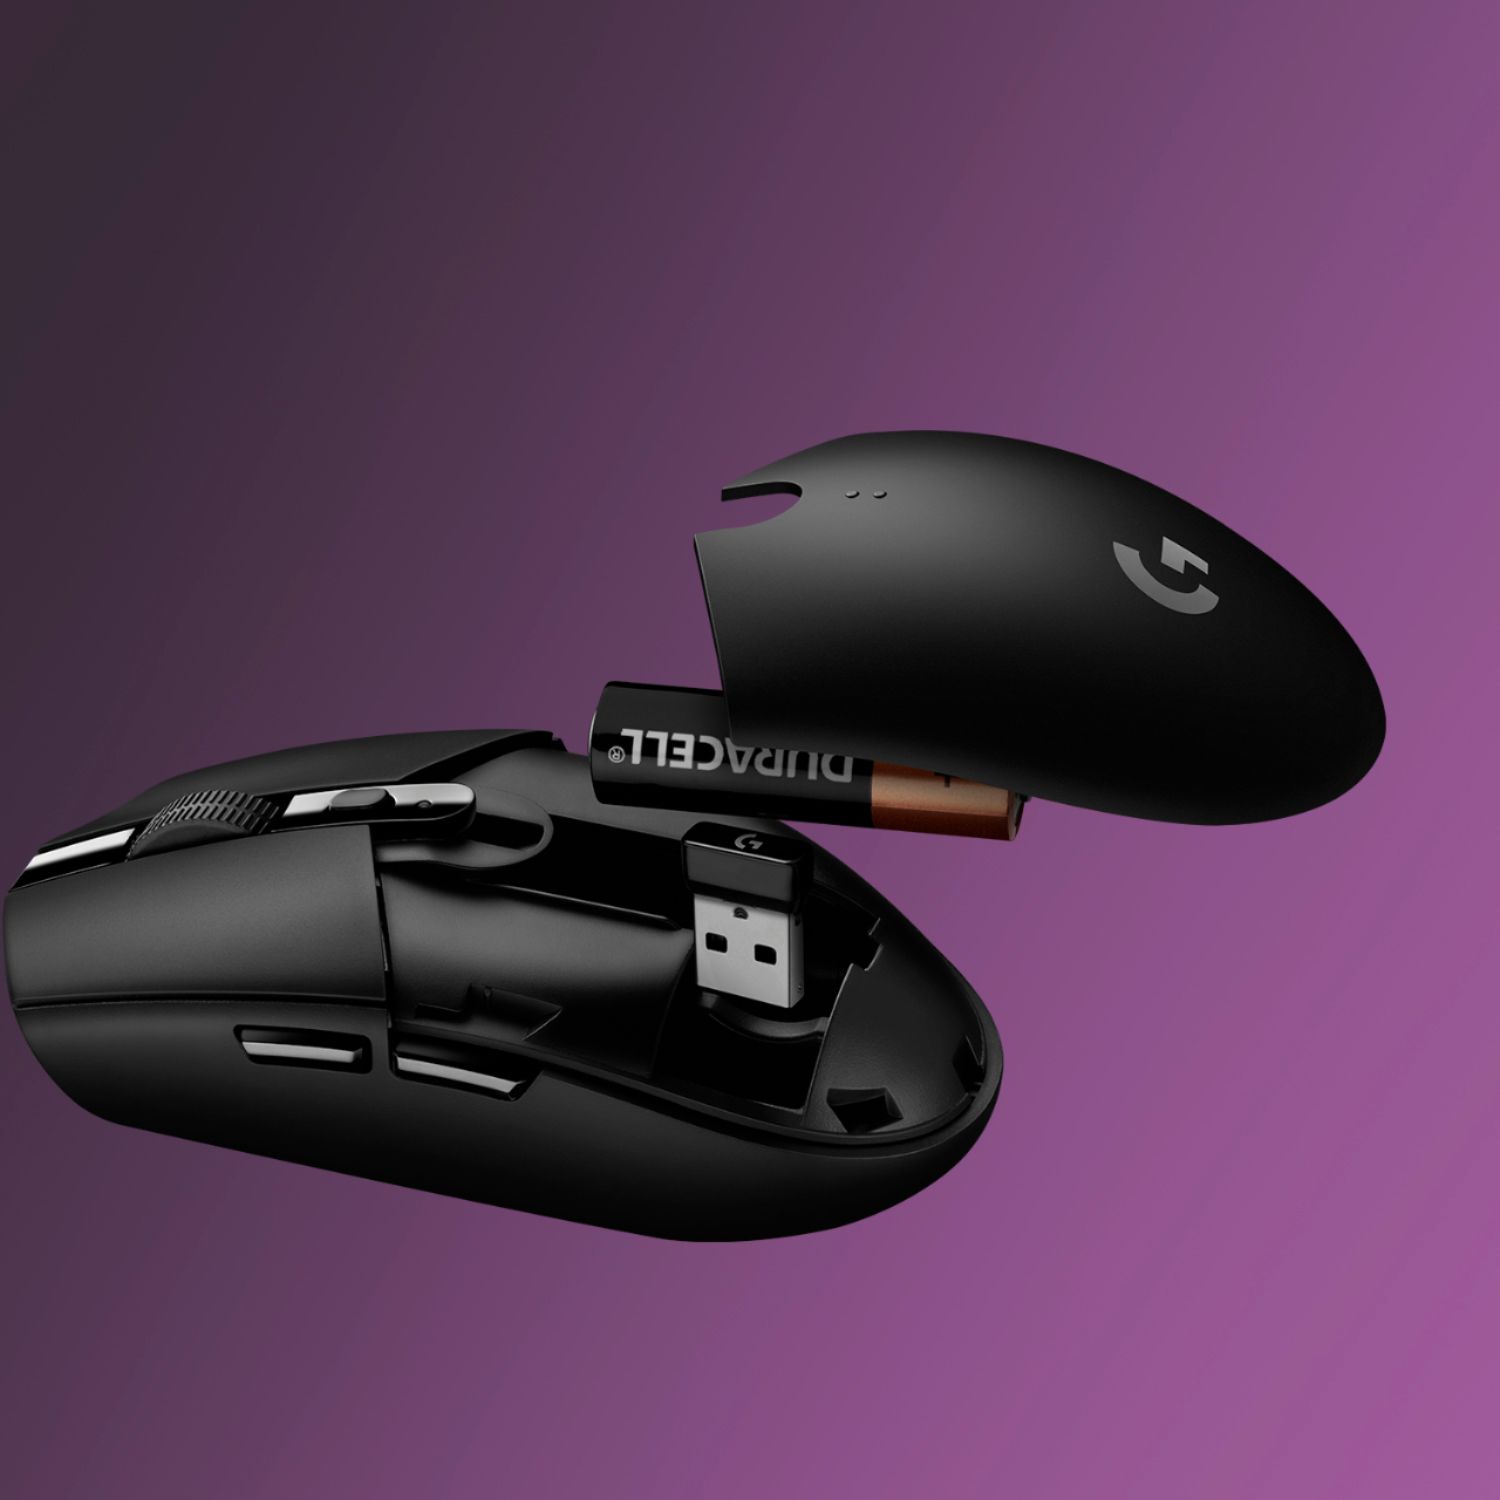 G305 Black Button 910-005280 Optical 6 Wireless 12,000 Sensor LIGHTSPEED - Best Gaming with Programmable Buy DPI Logitech HERO Mouse